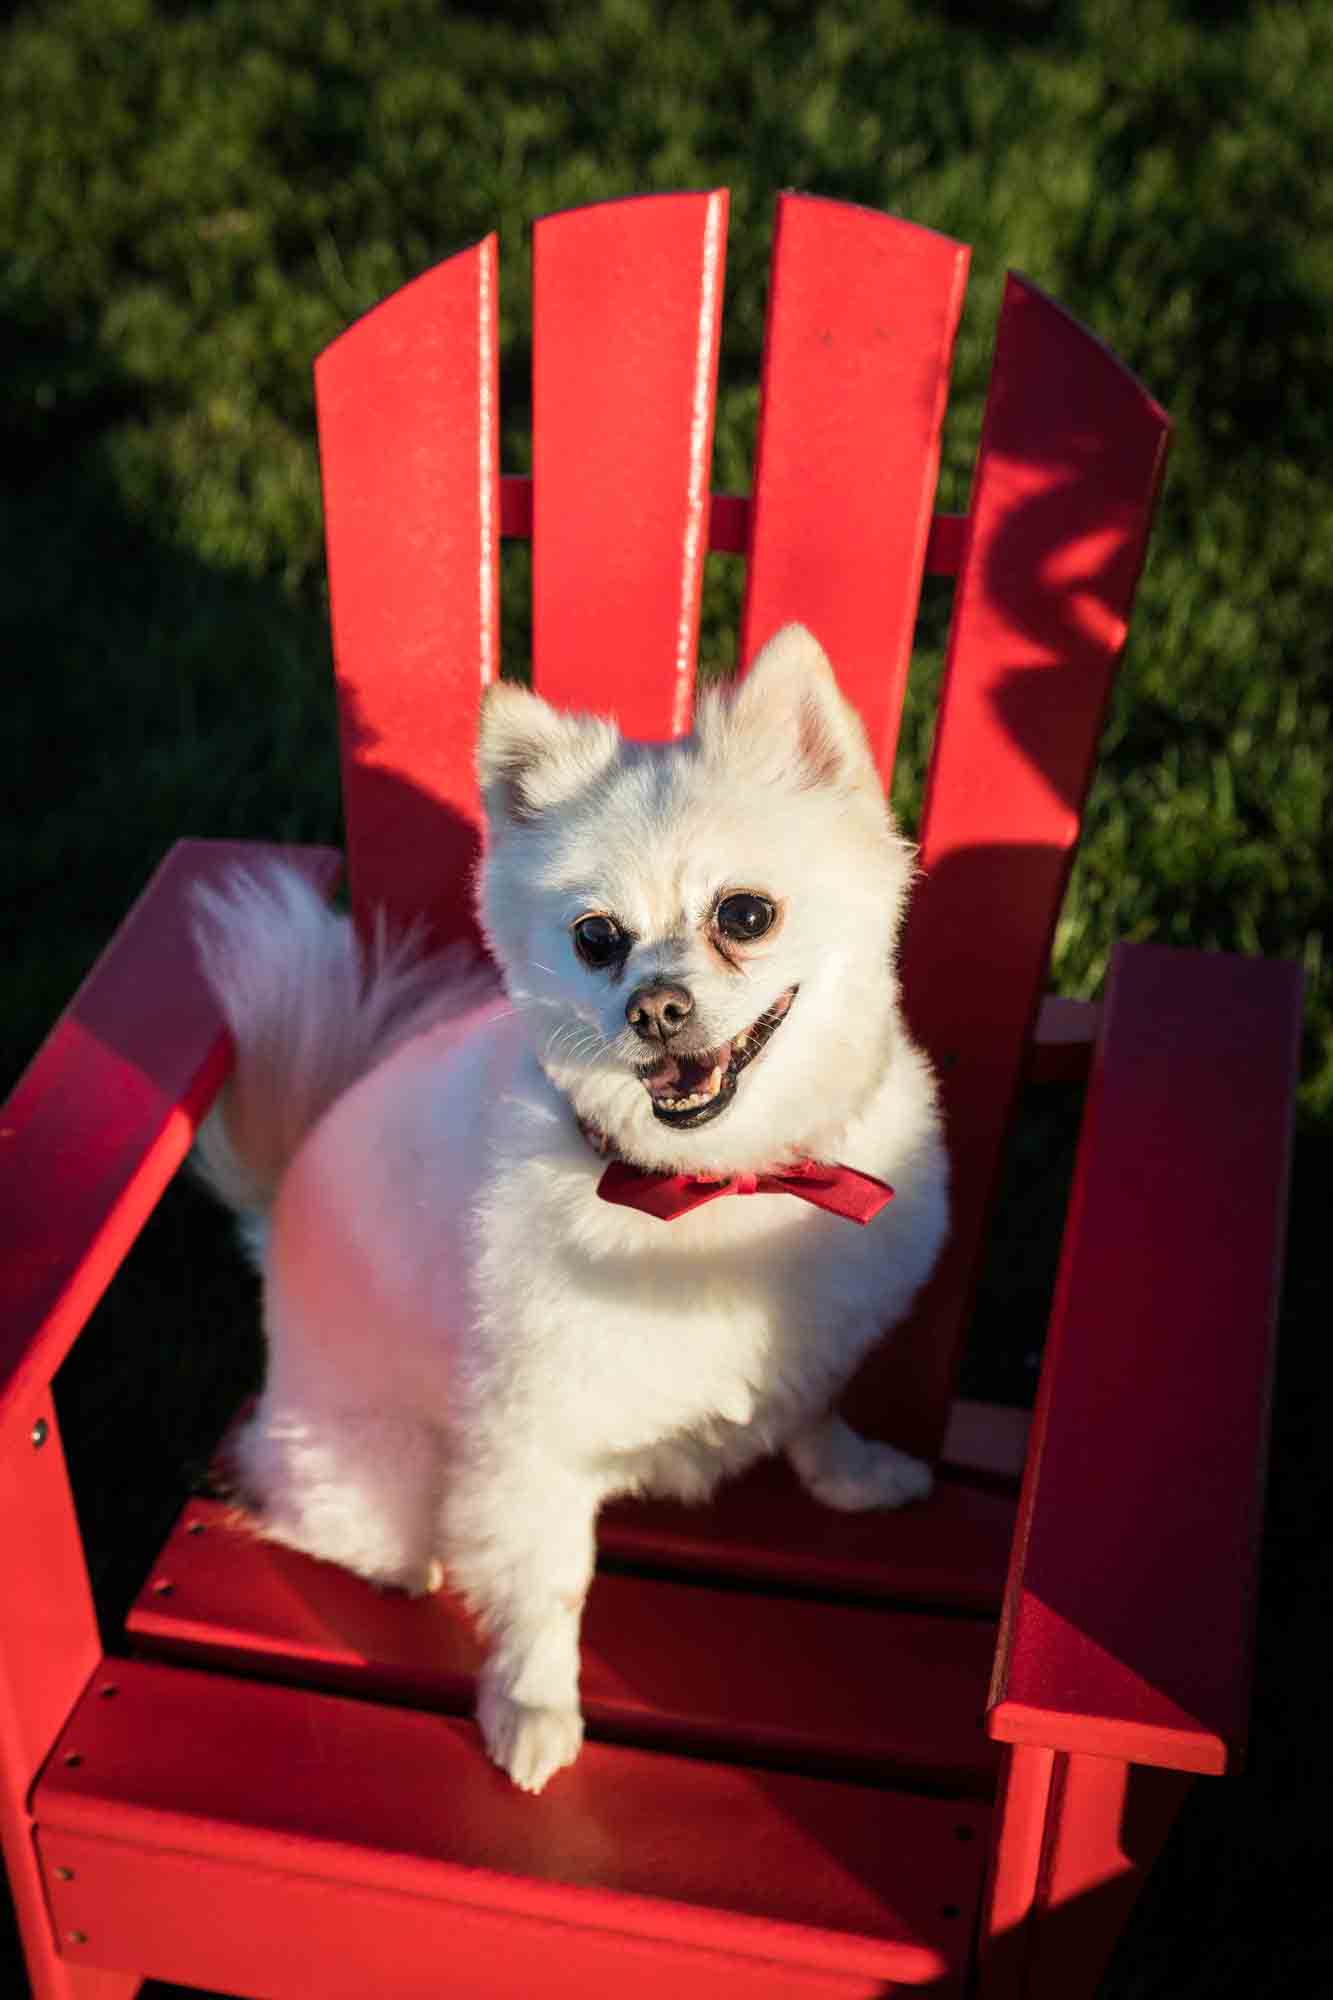 Governors Island pet portrait of white Pomeranian sitting on Adirondack chair